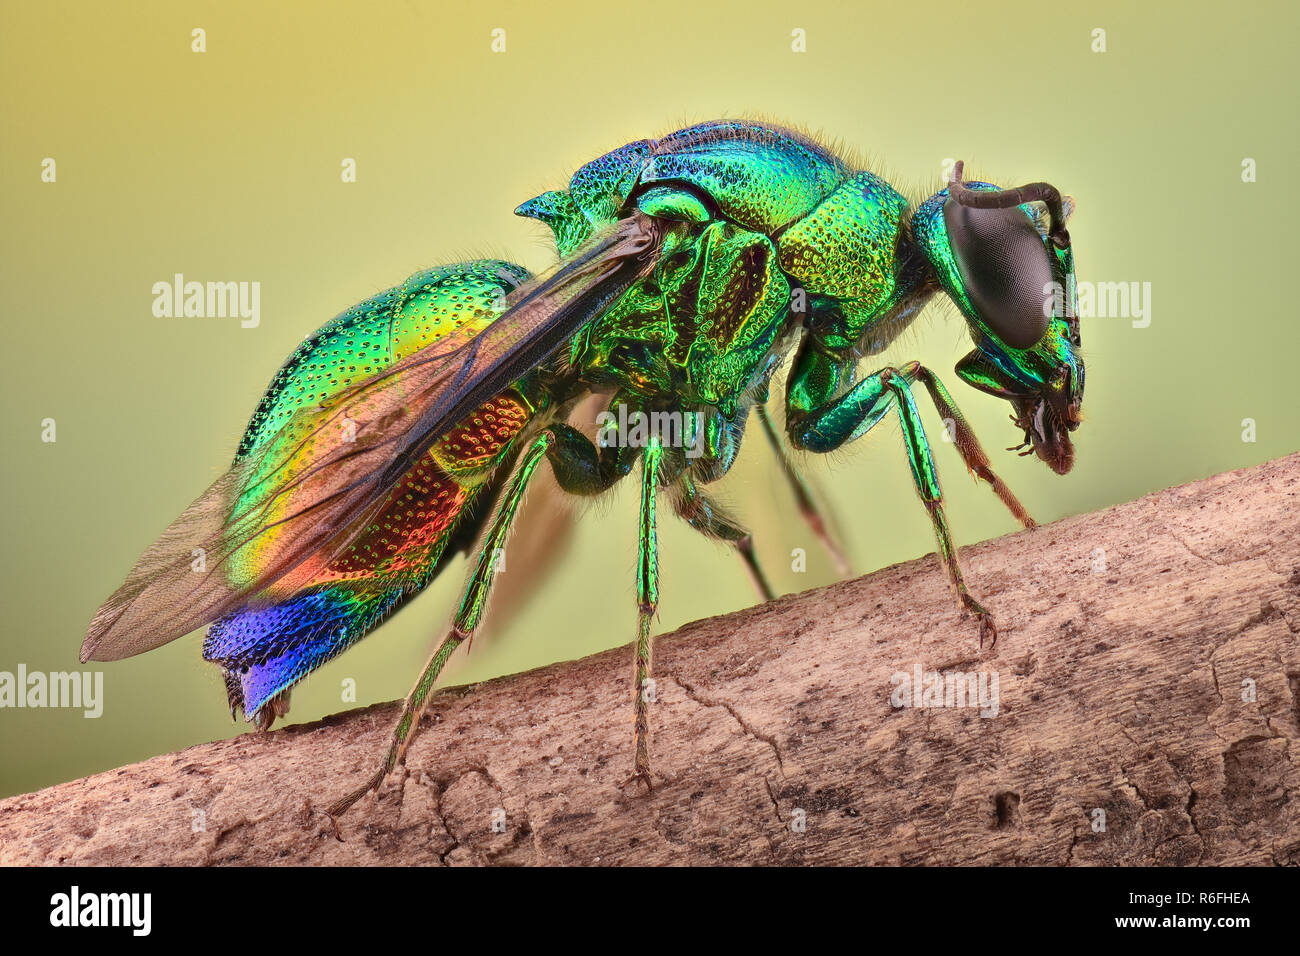 Extreme magnification - Cuckoo wasp Stock Photo